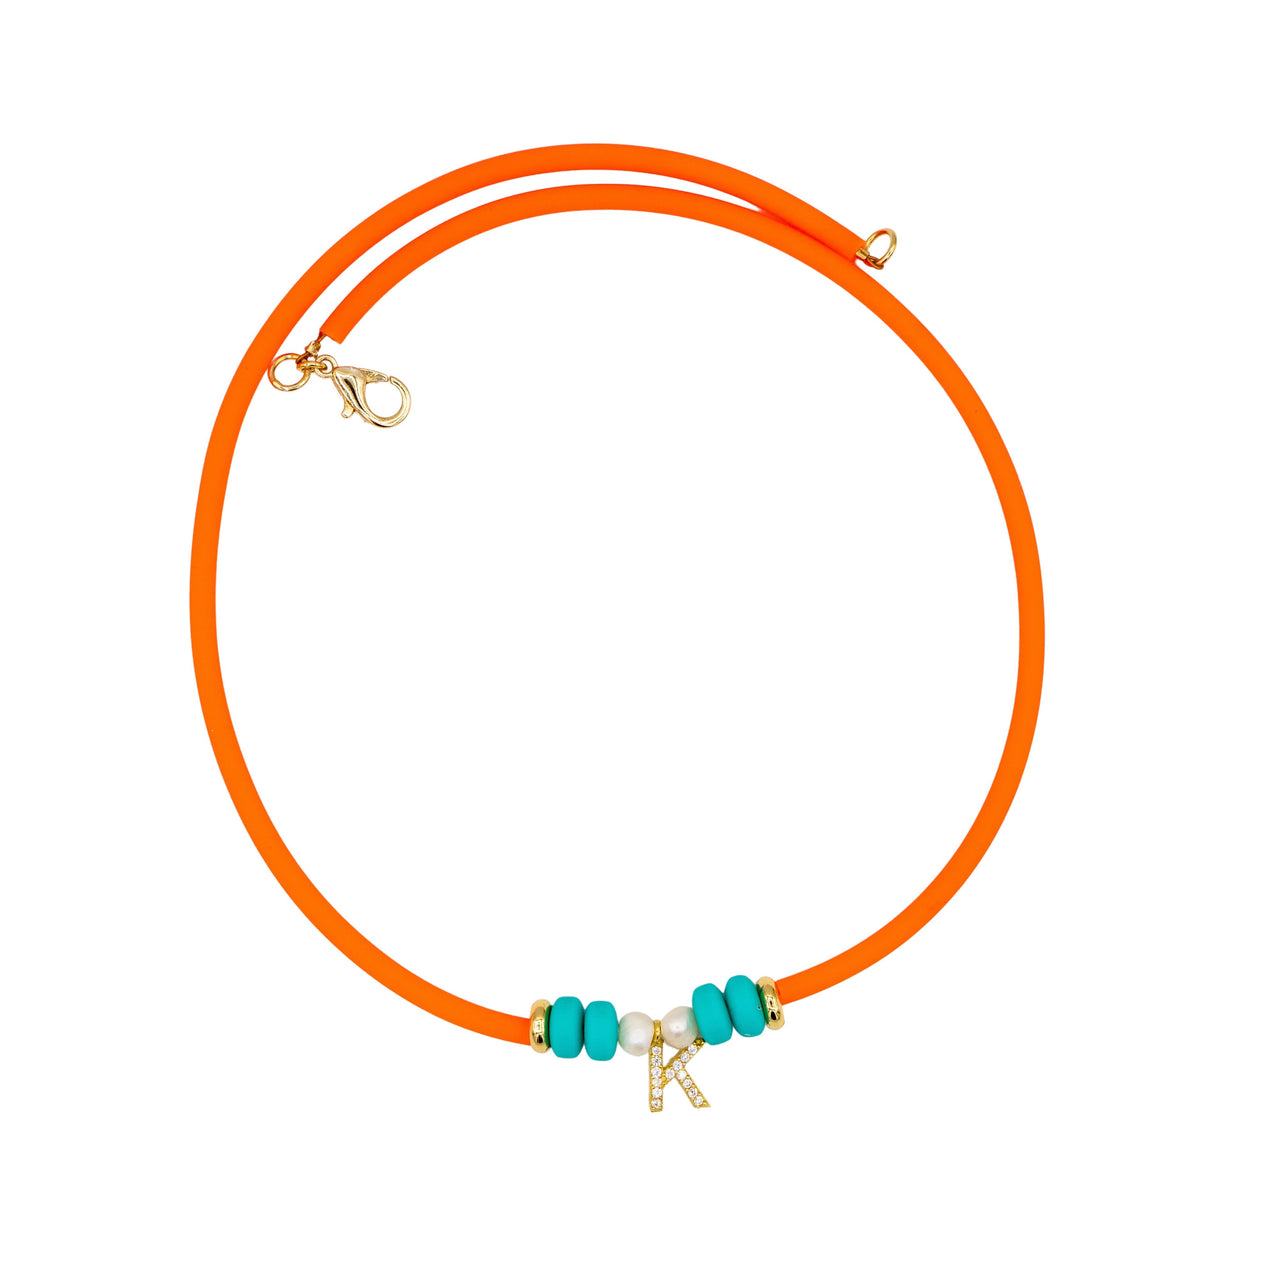 The Neon Orange Initial Necklace